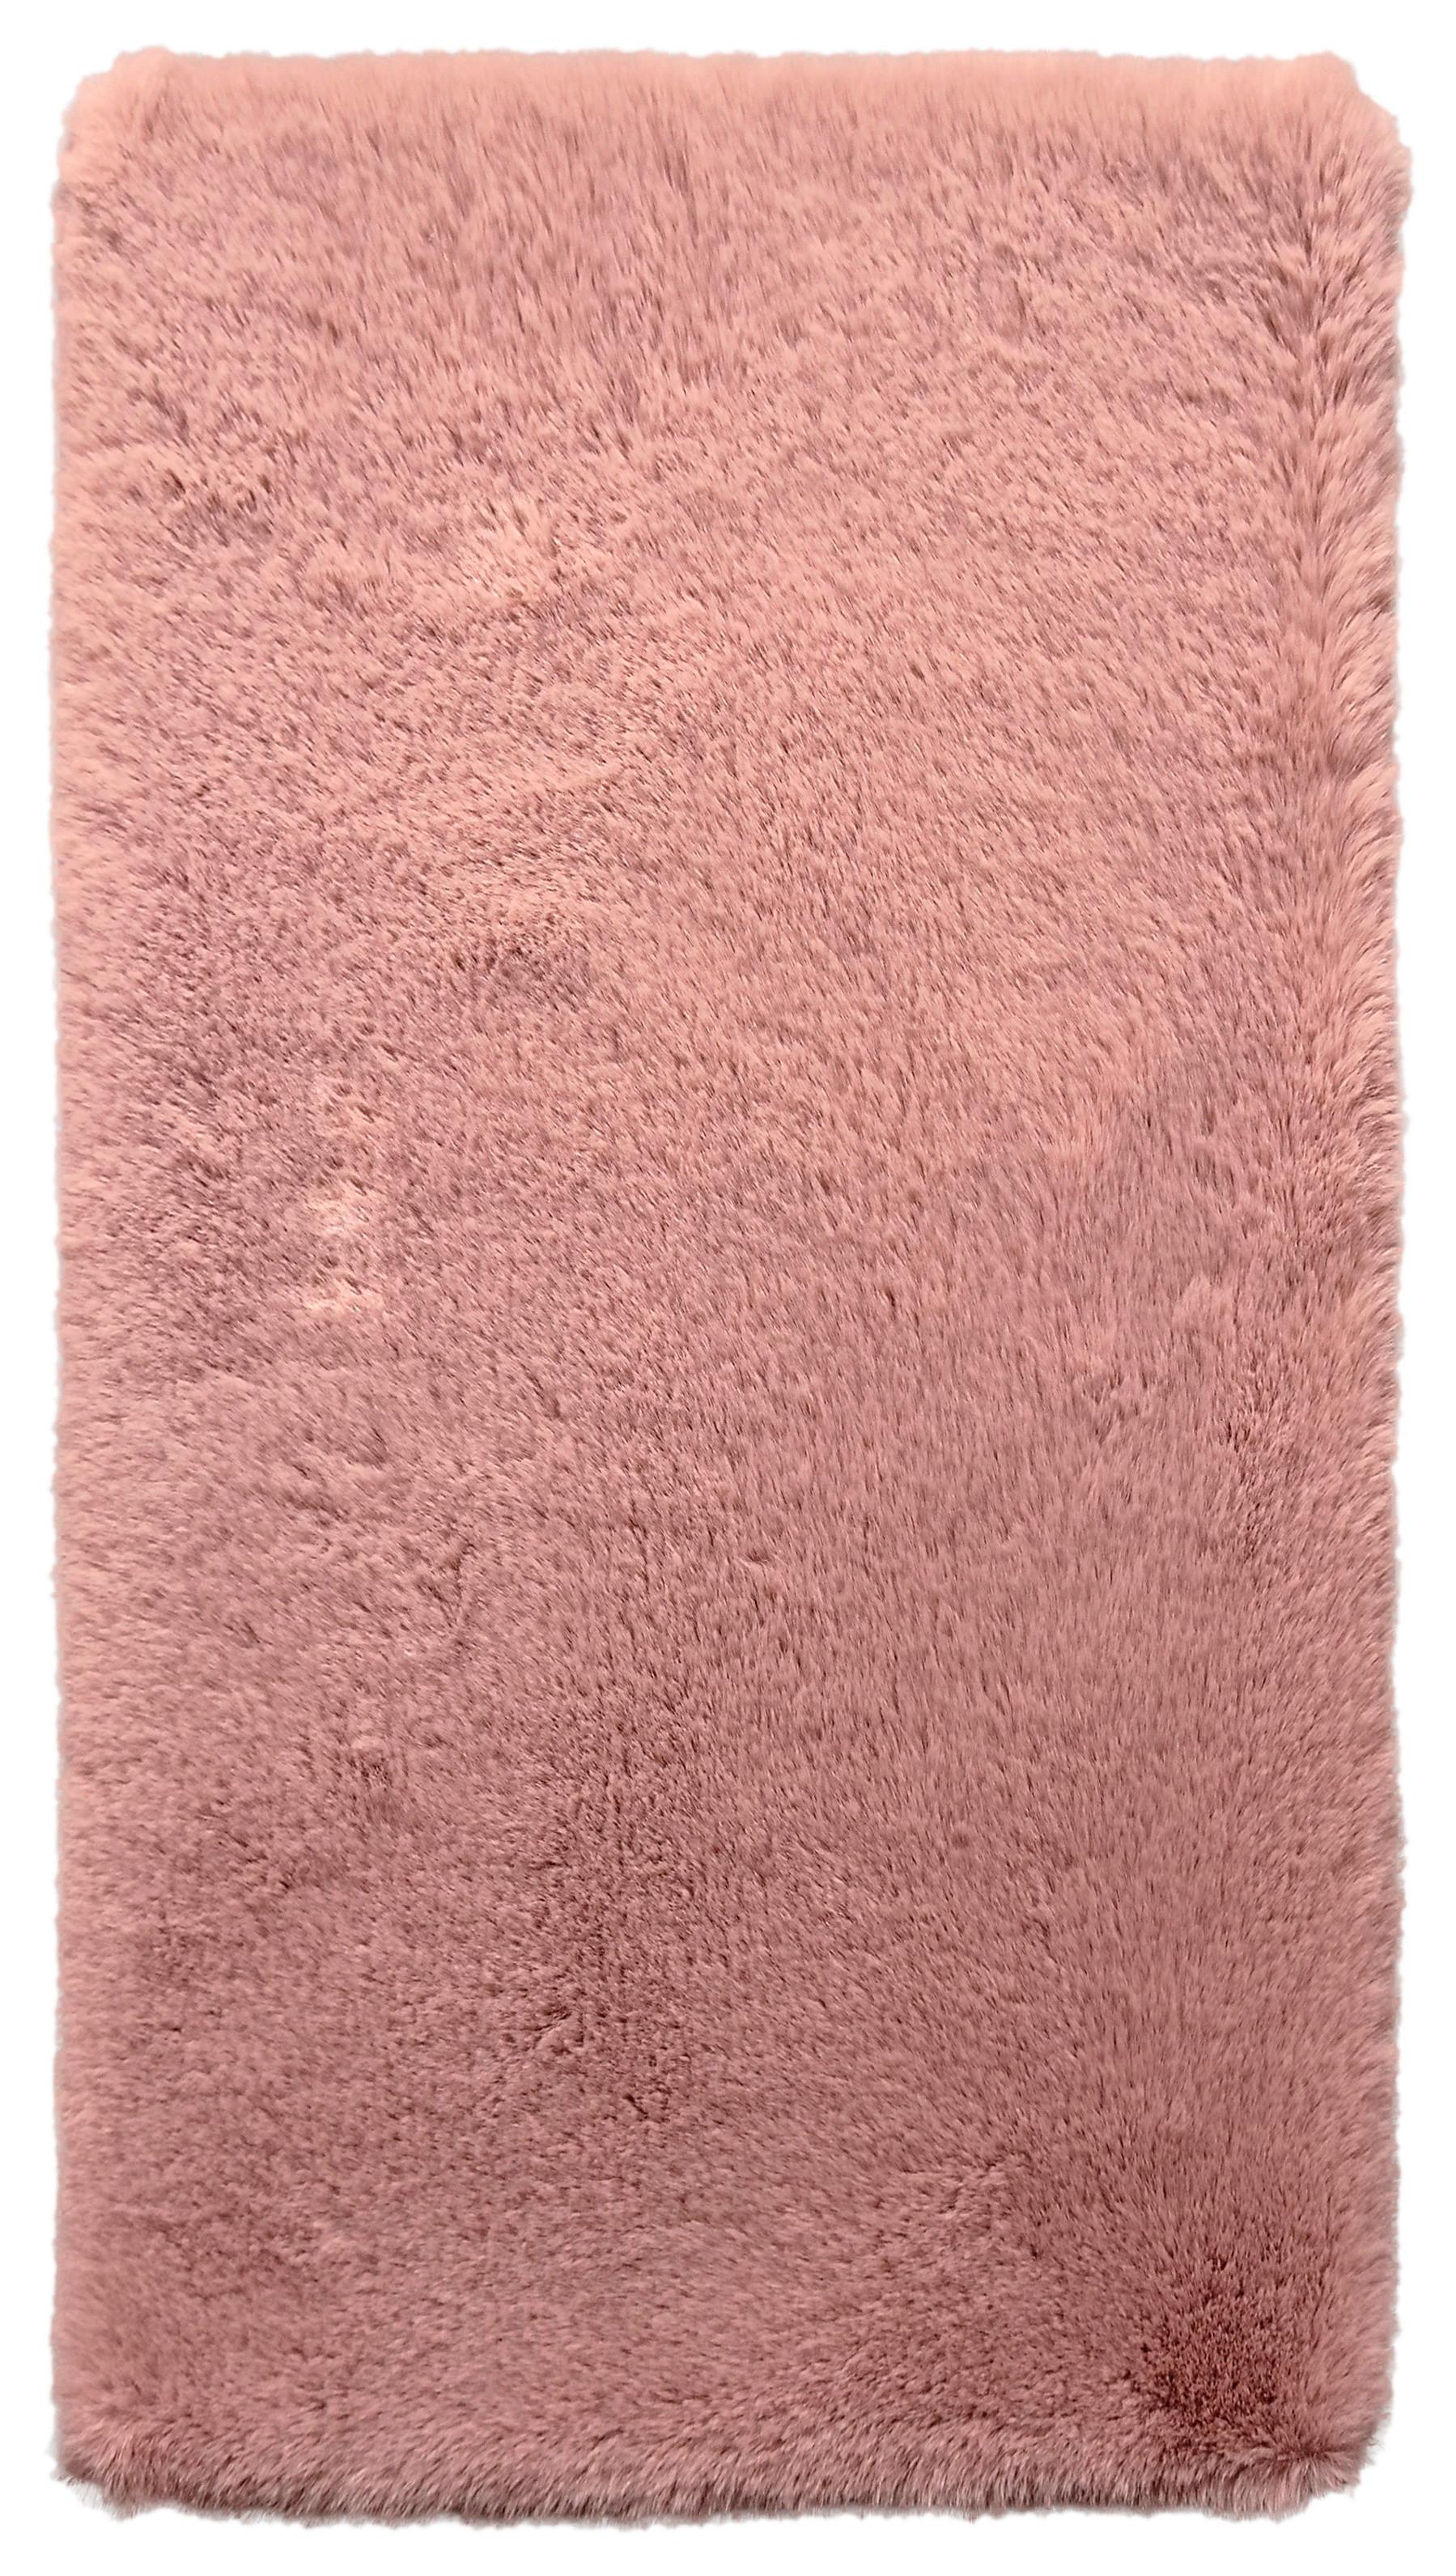 Umělá Kožešina Caroline 1, 80/150cm, Růžová - starorůžová, textil (80/150cm) - Modern Living